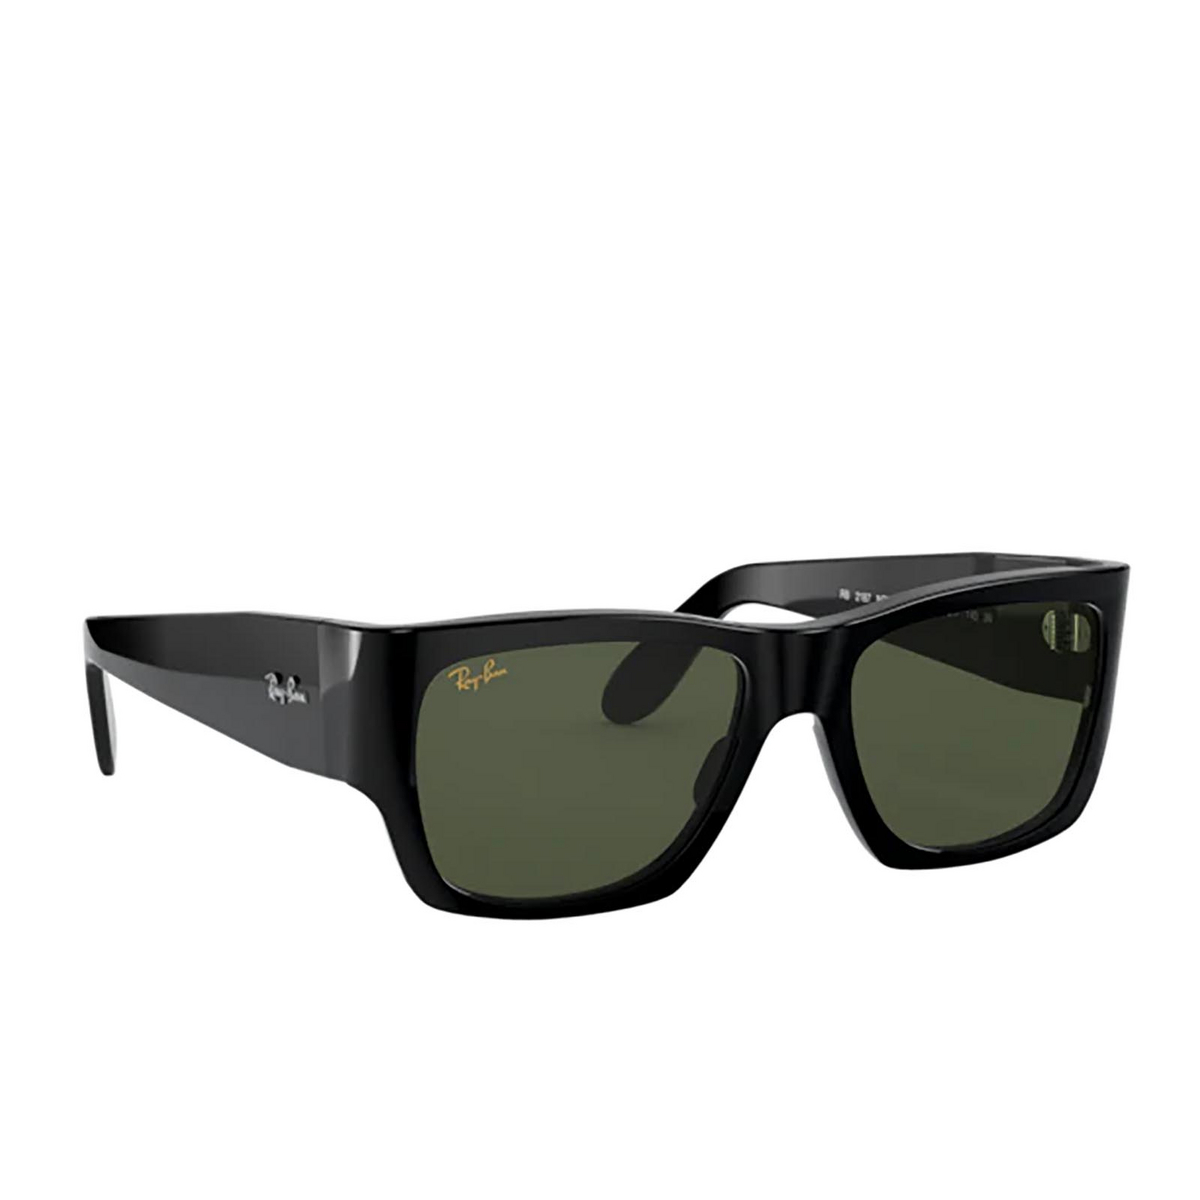 Ray-Ban WAYFARER NOMAD Sunglasses 901/31 Shiny Black - three-quarters view